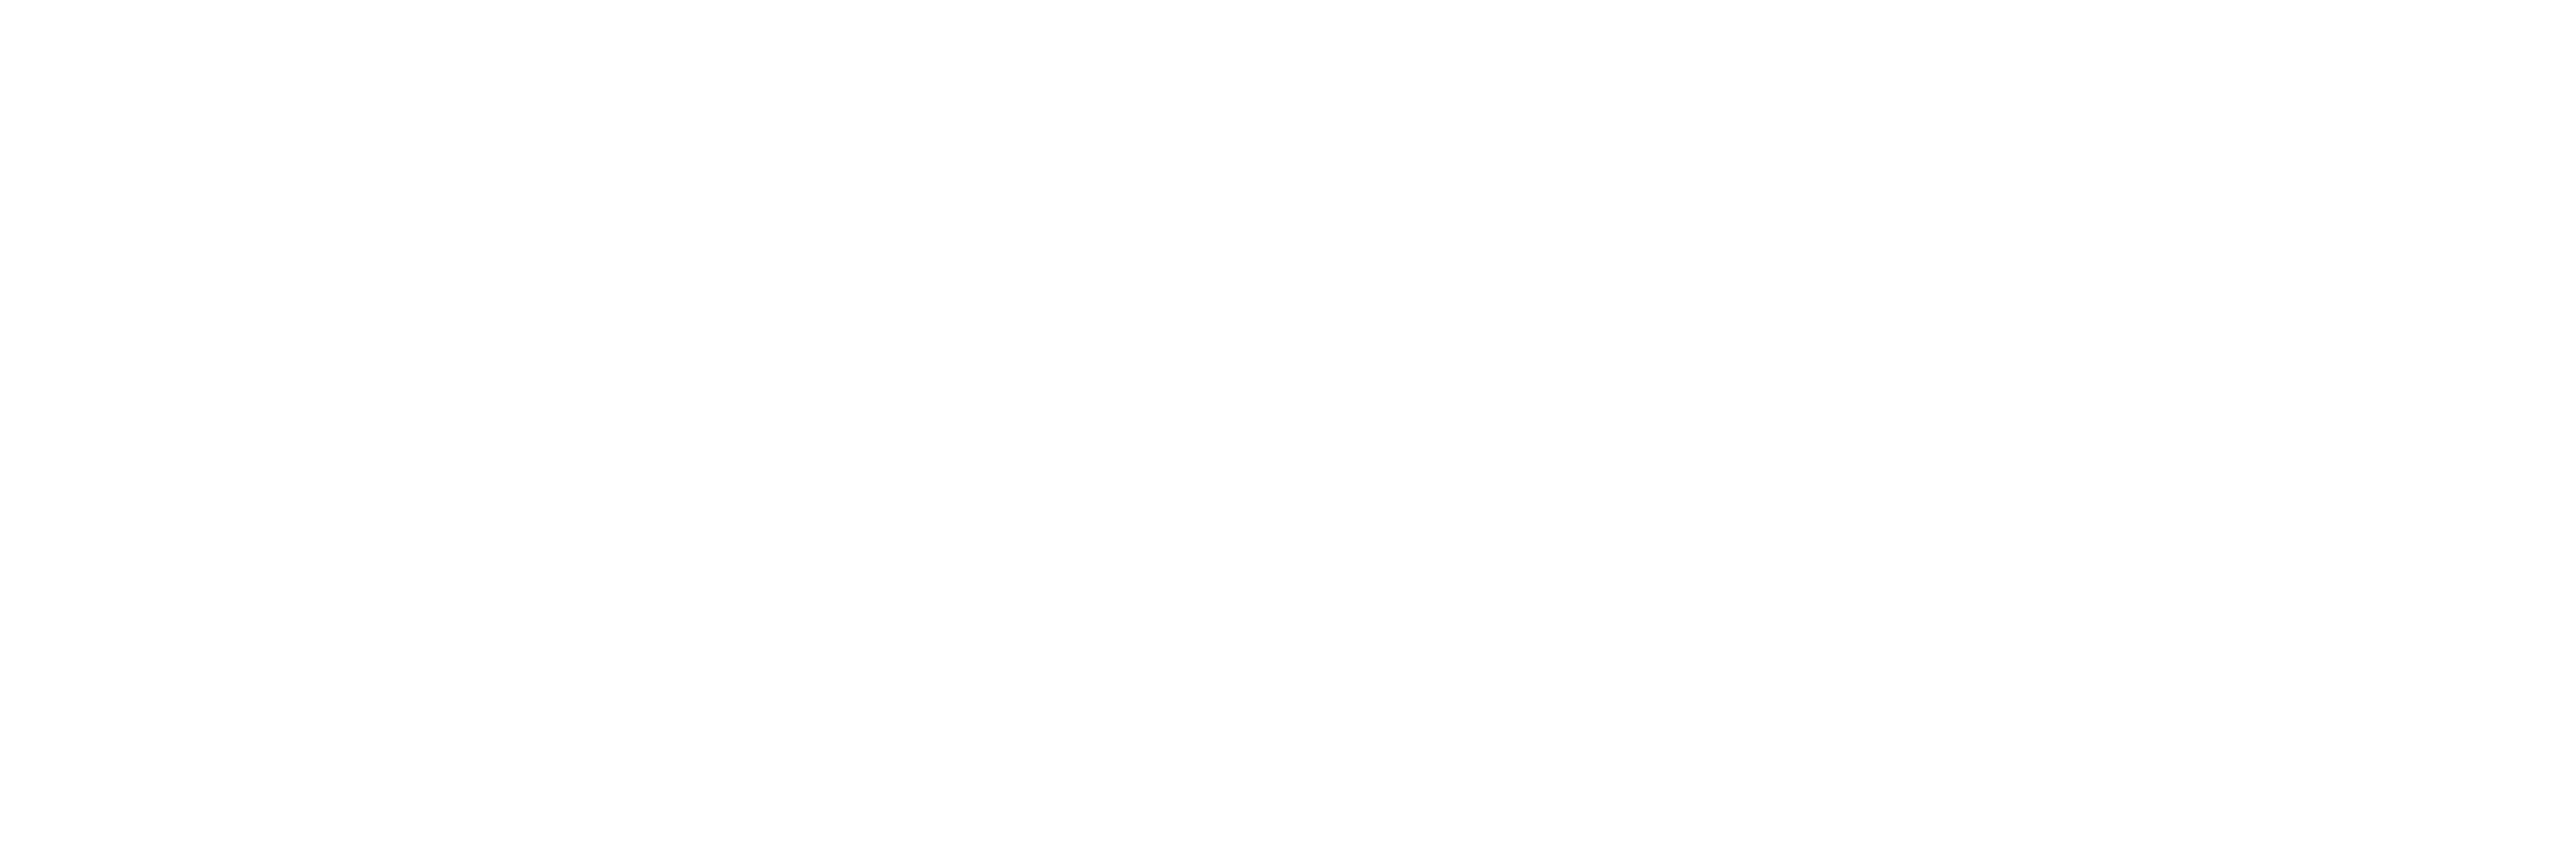 Wallonie entreprendre